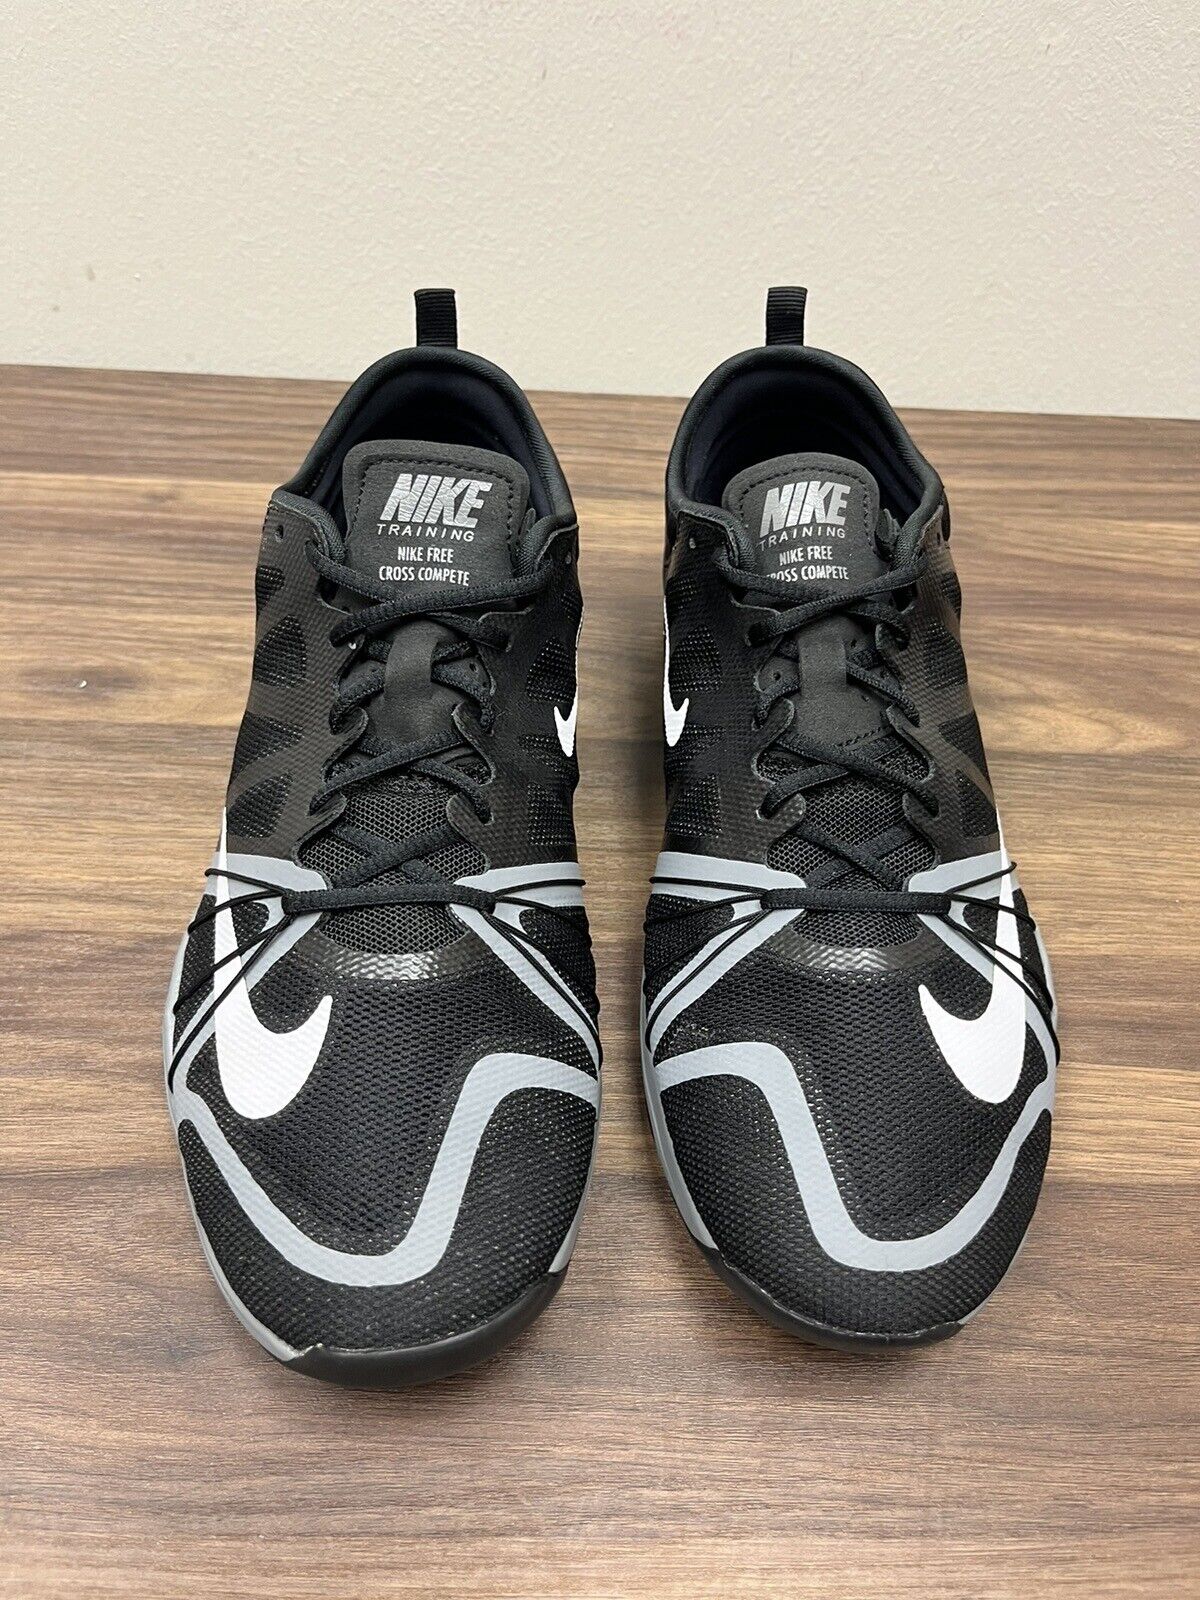 Nike Free Cross Compete Women's Training Shoe black sneakers tennis  size 8.5